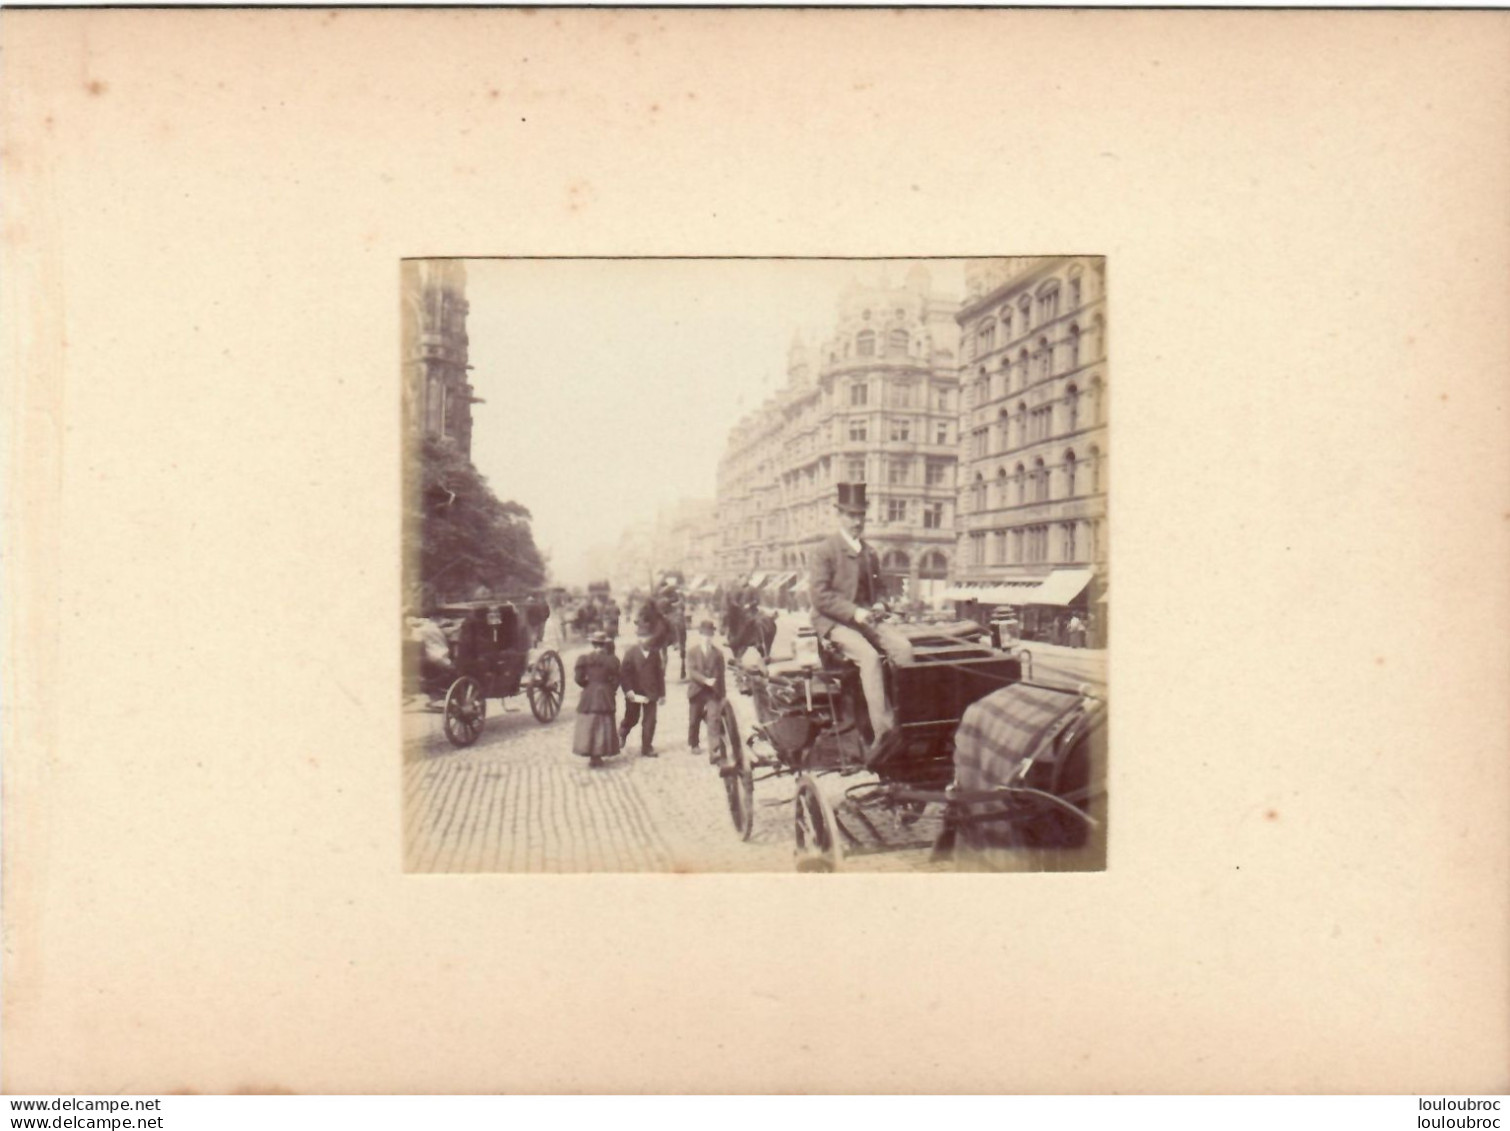 EDIMBOURG PRINCES STREET  FIN 19e PHOTO ORIGINALE DE 8.50X7 CM COLLEE SUR CARTON 18X13CM - Old (before 1900)